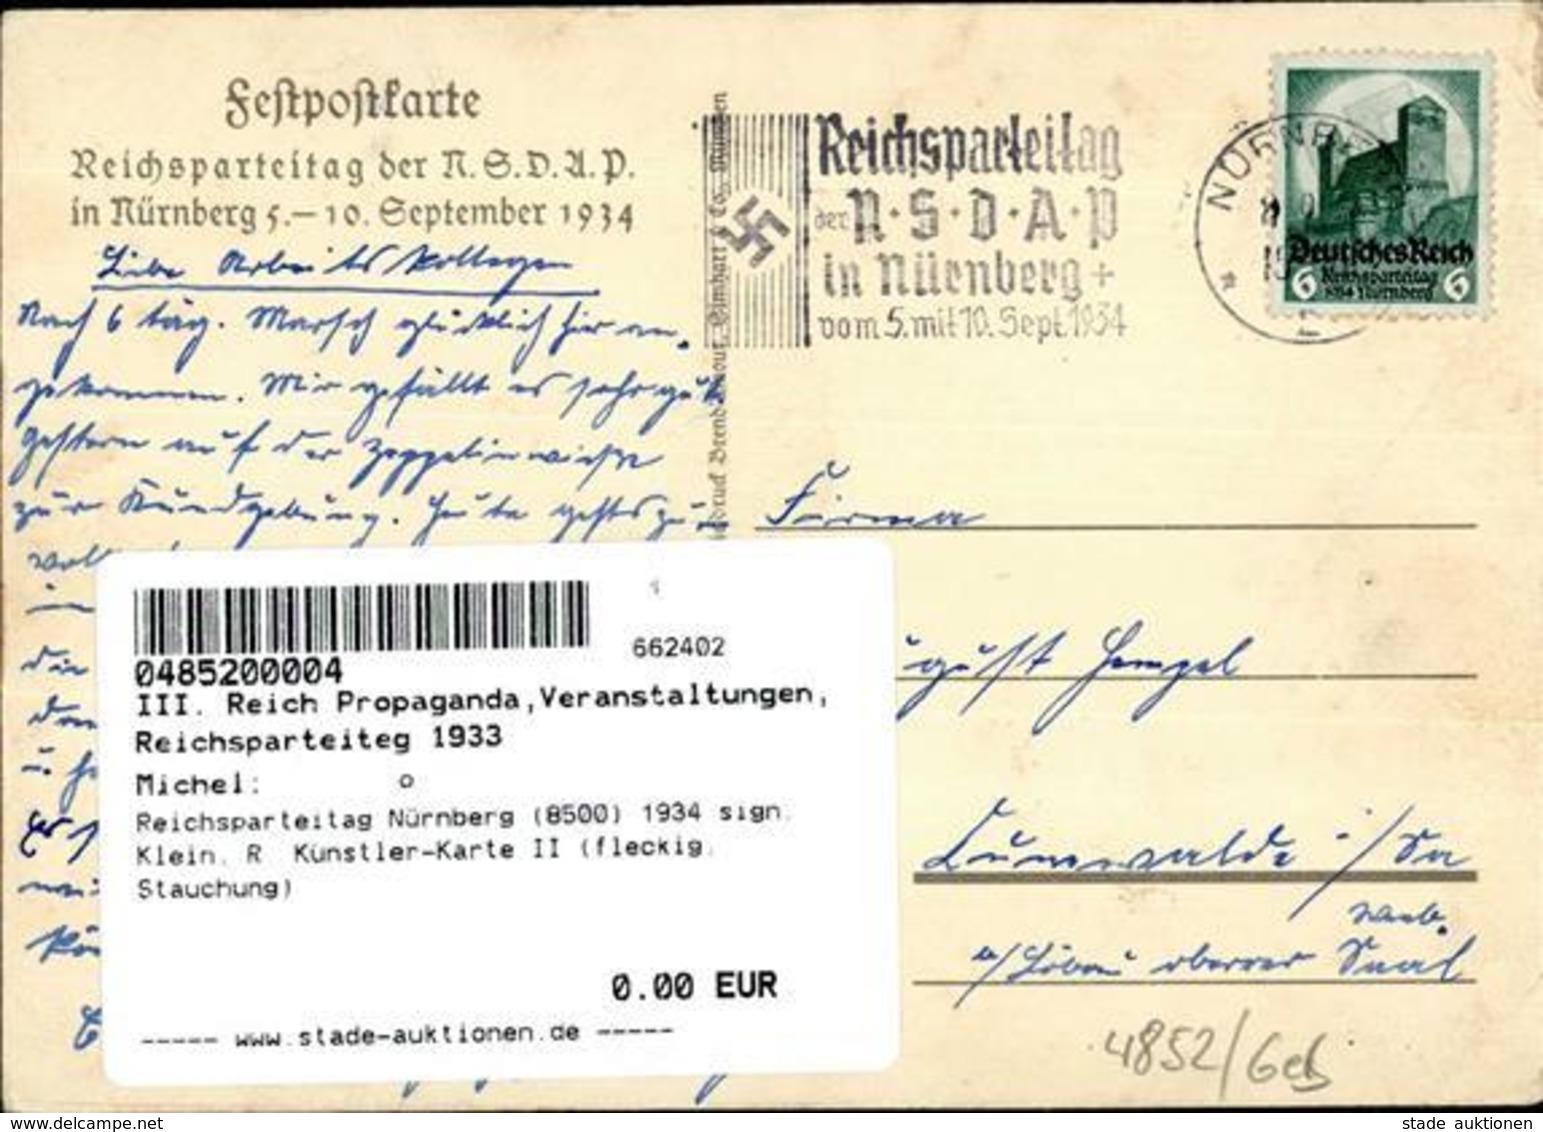 Reichsparteitag Nürnberg (8500) 1934 Sign. Klein, R. Künstler-Karte II (fleckig, Stauchung) - Guerre 1939-45